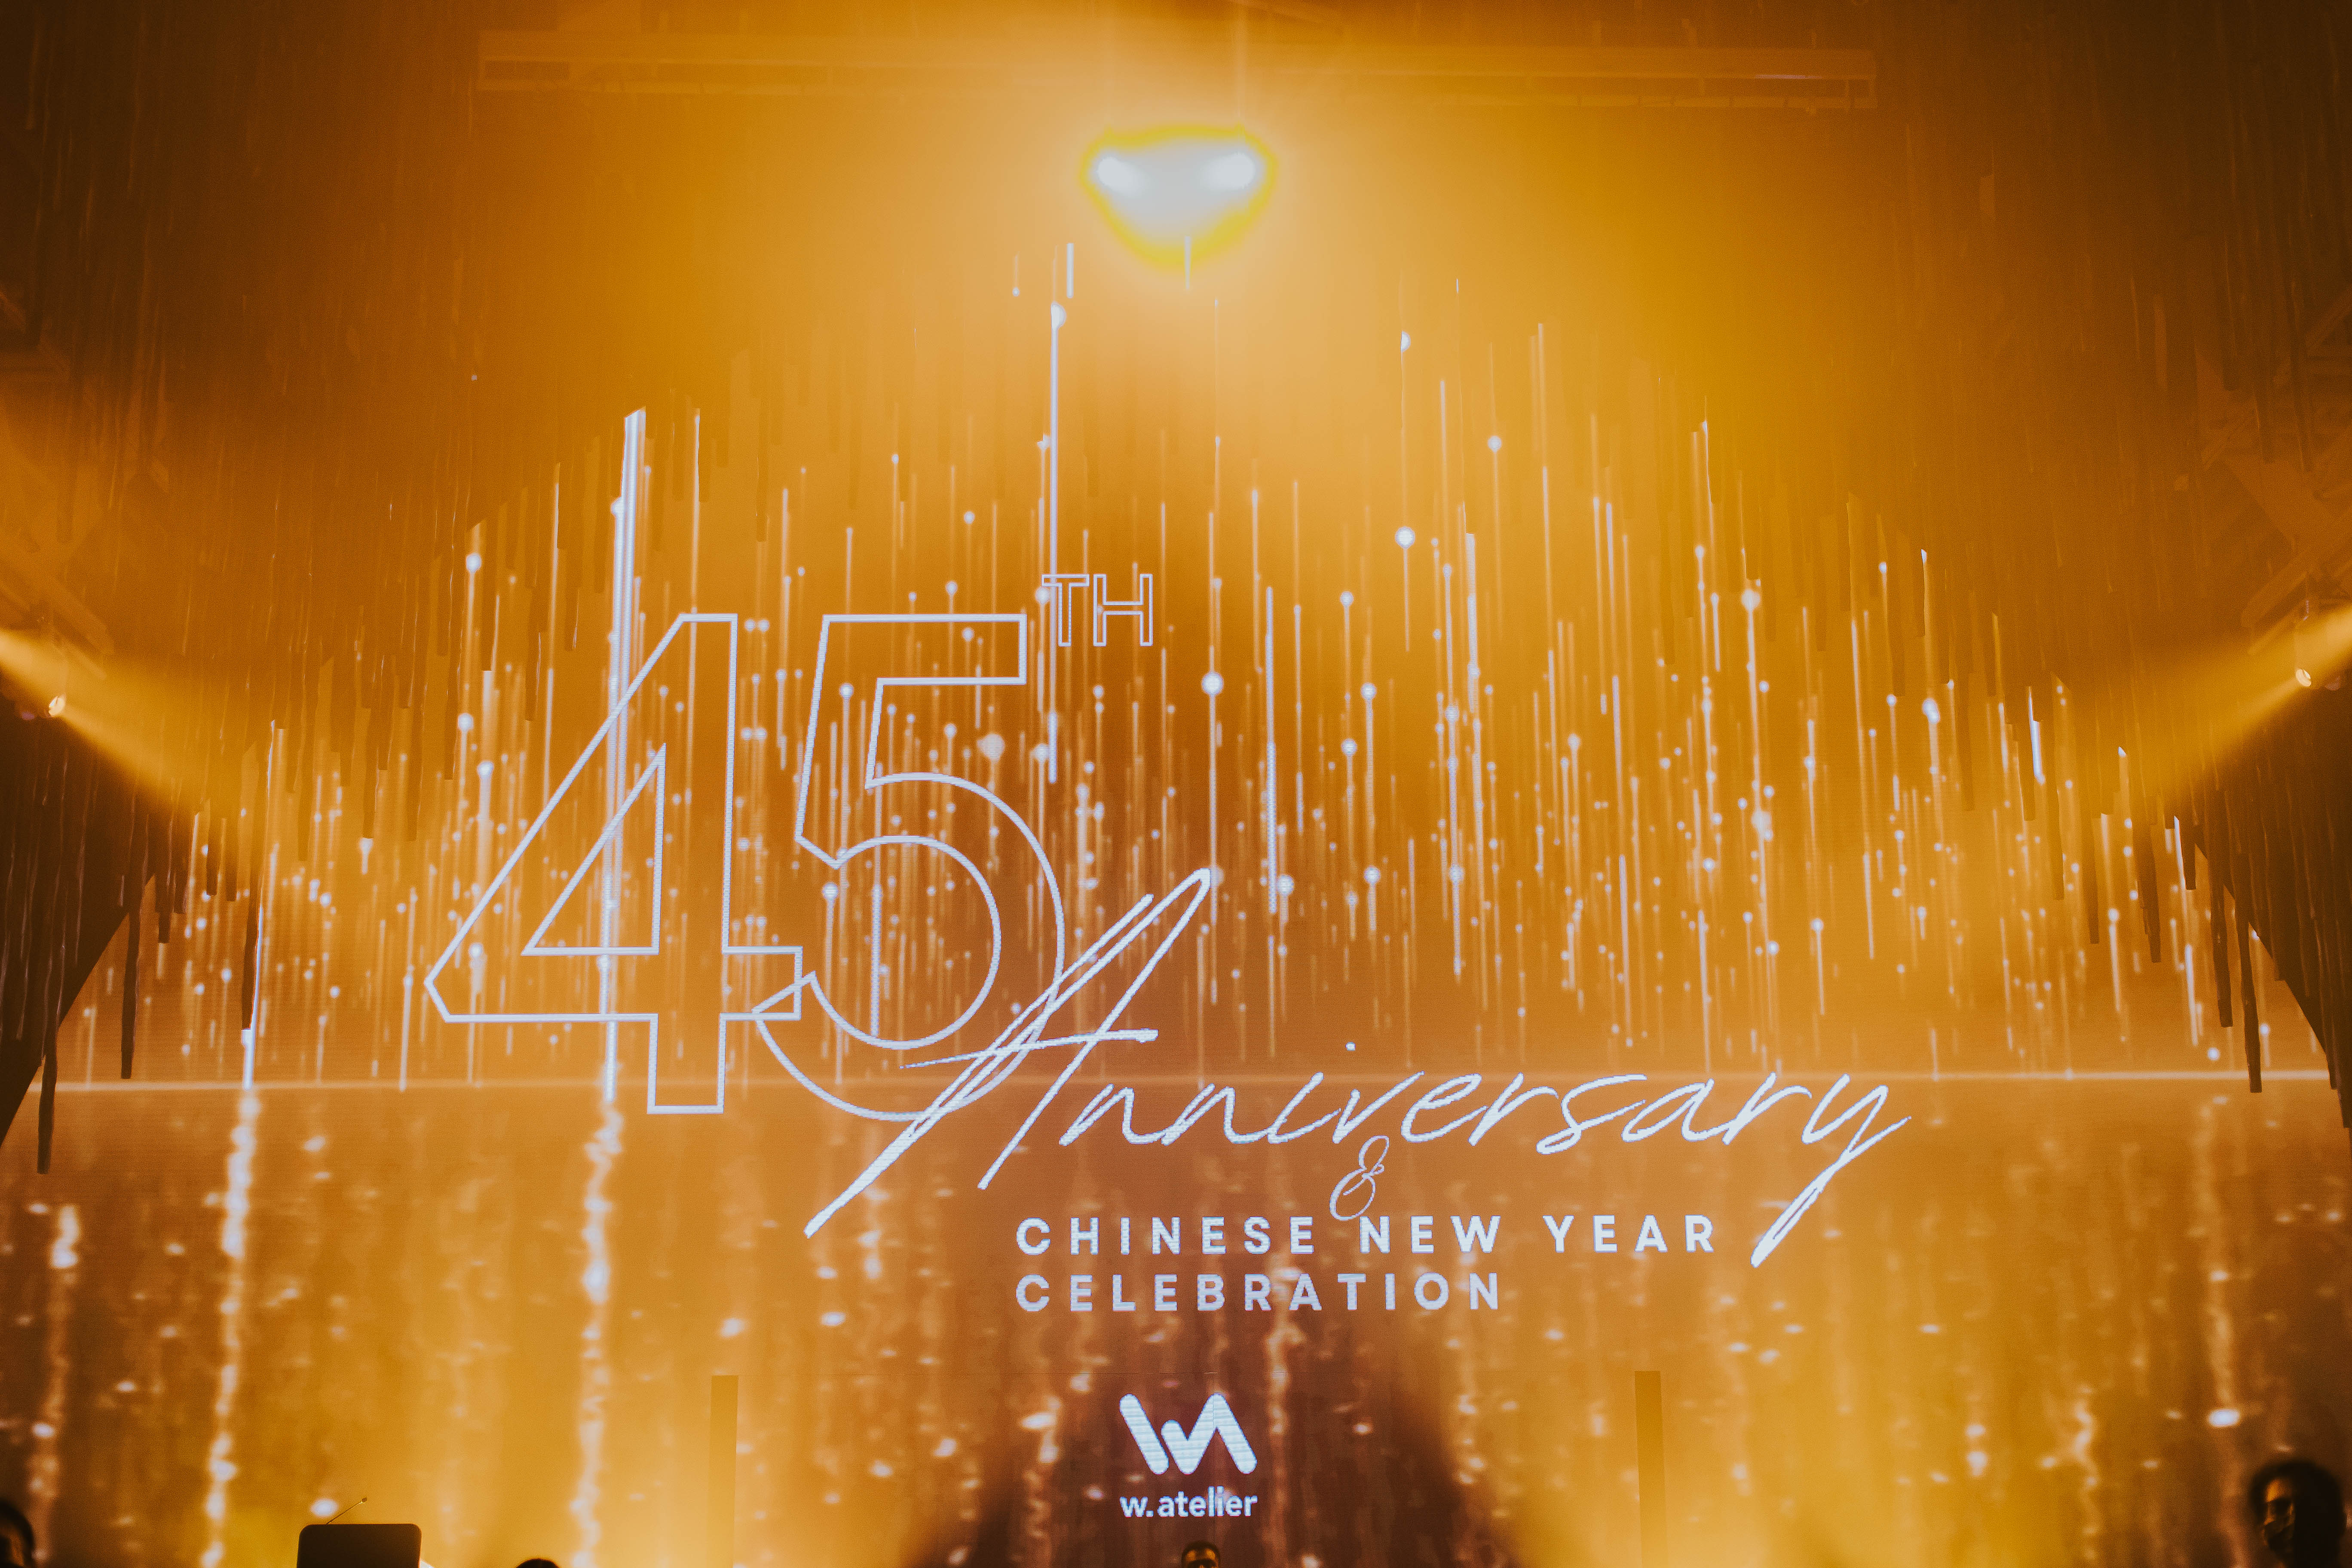 45th anniversary-W. Atelier Singapore 